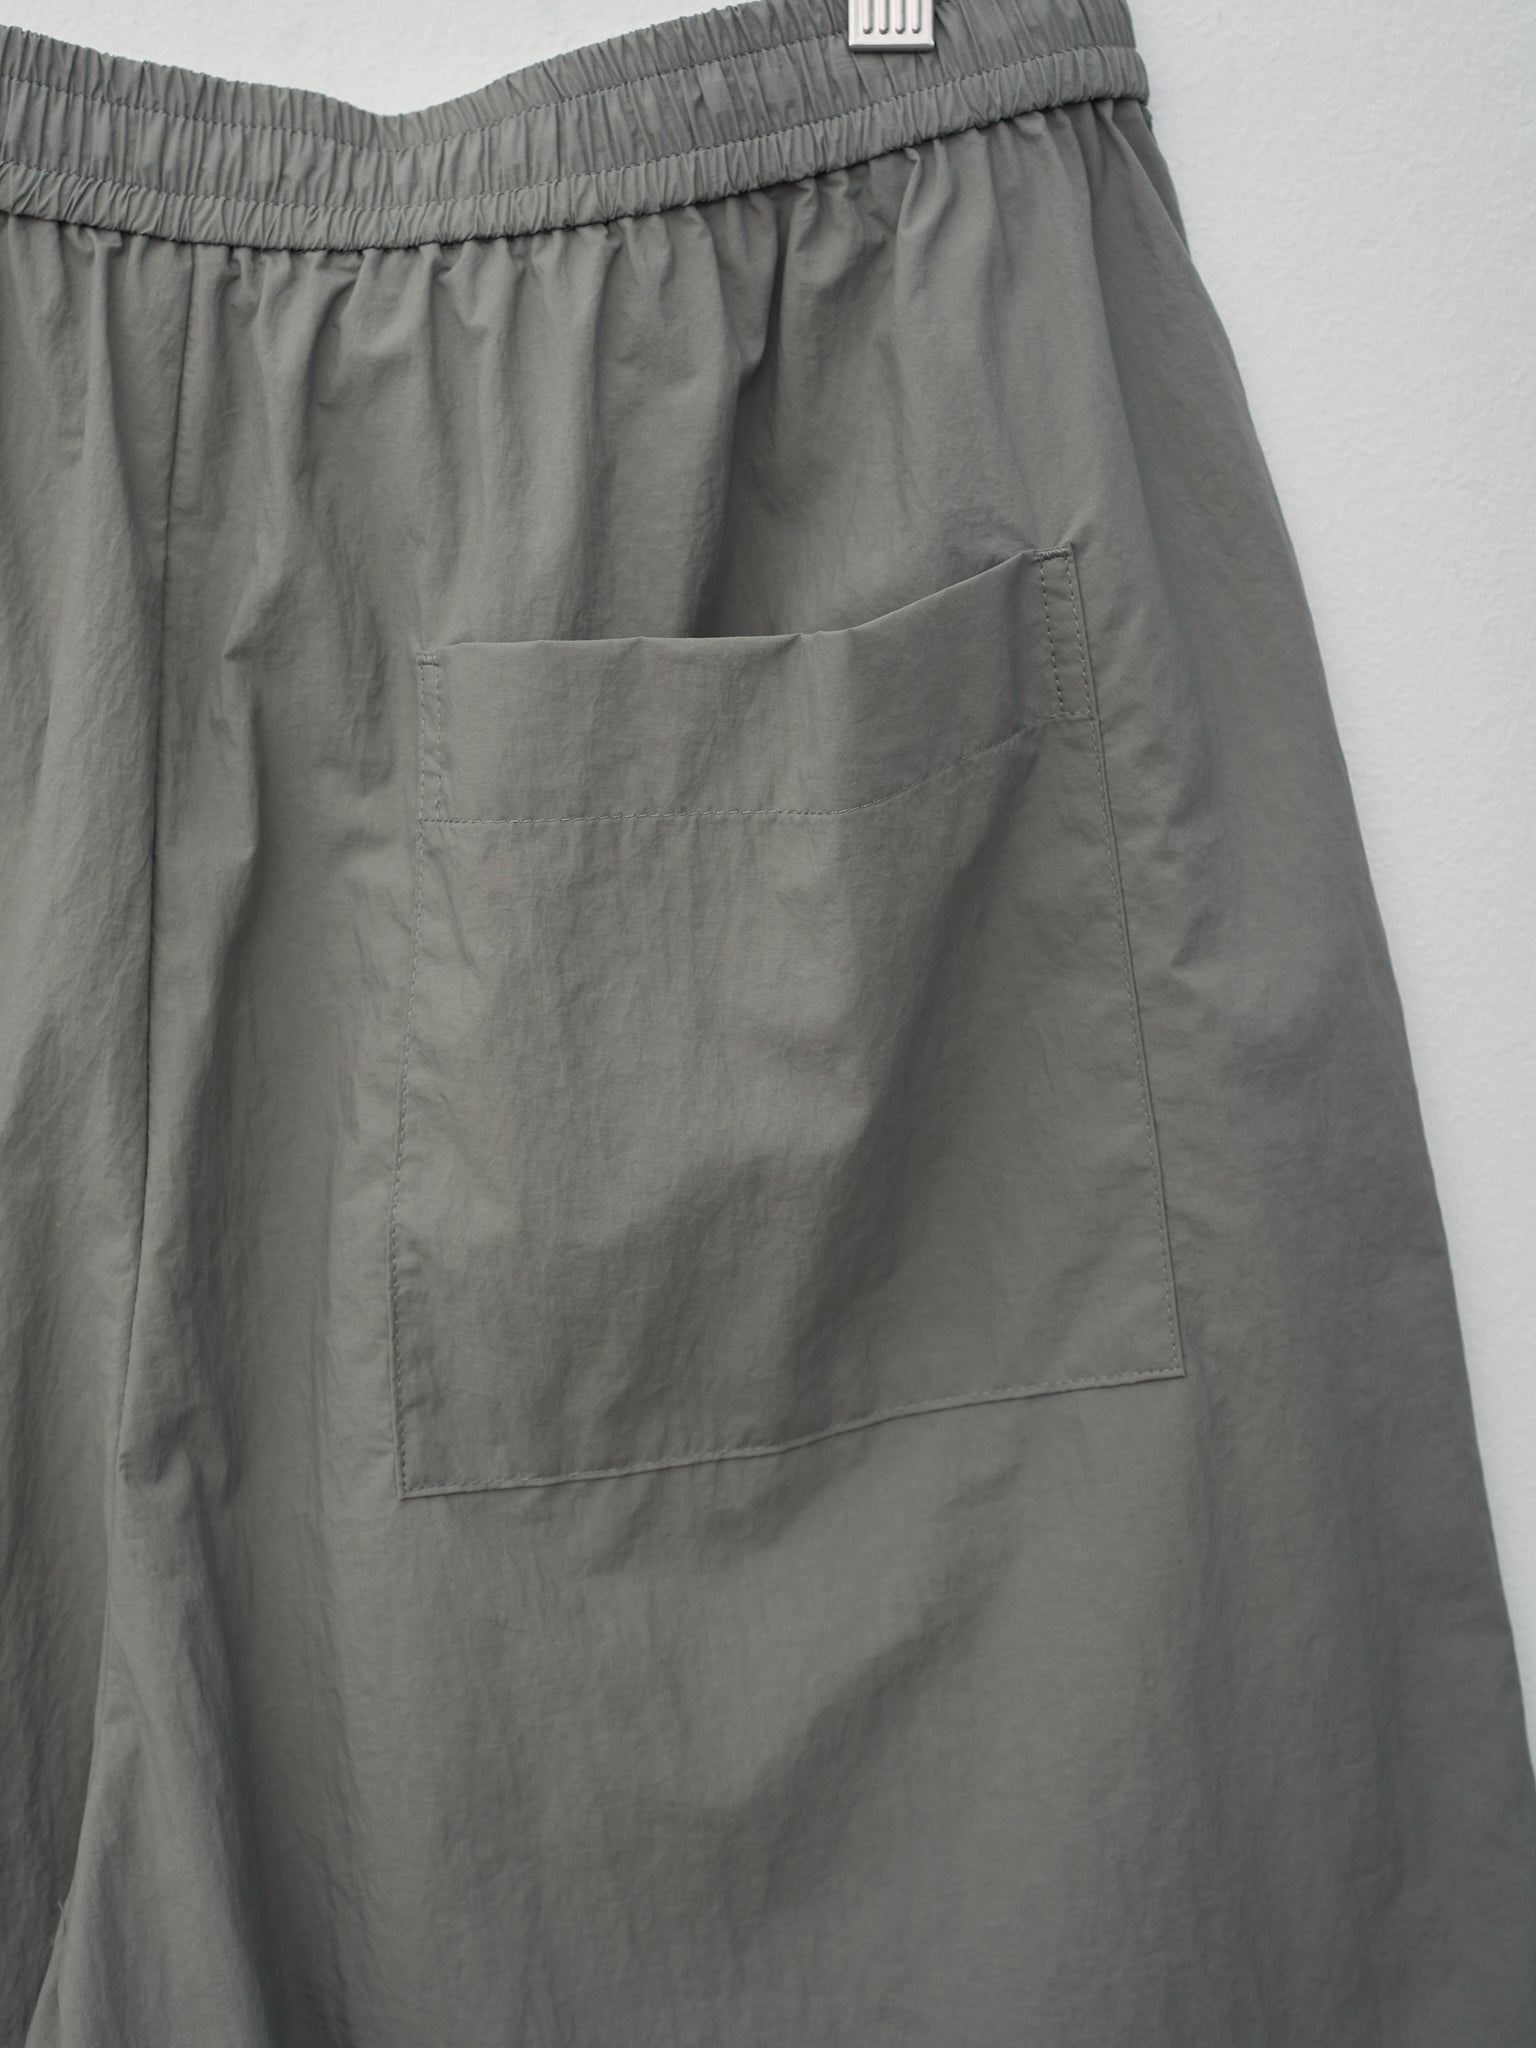 Namu Shop - Aton Travel Nylon Easy Shorts - Green